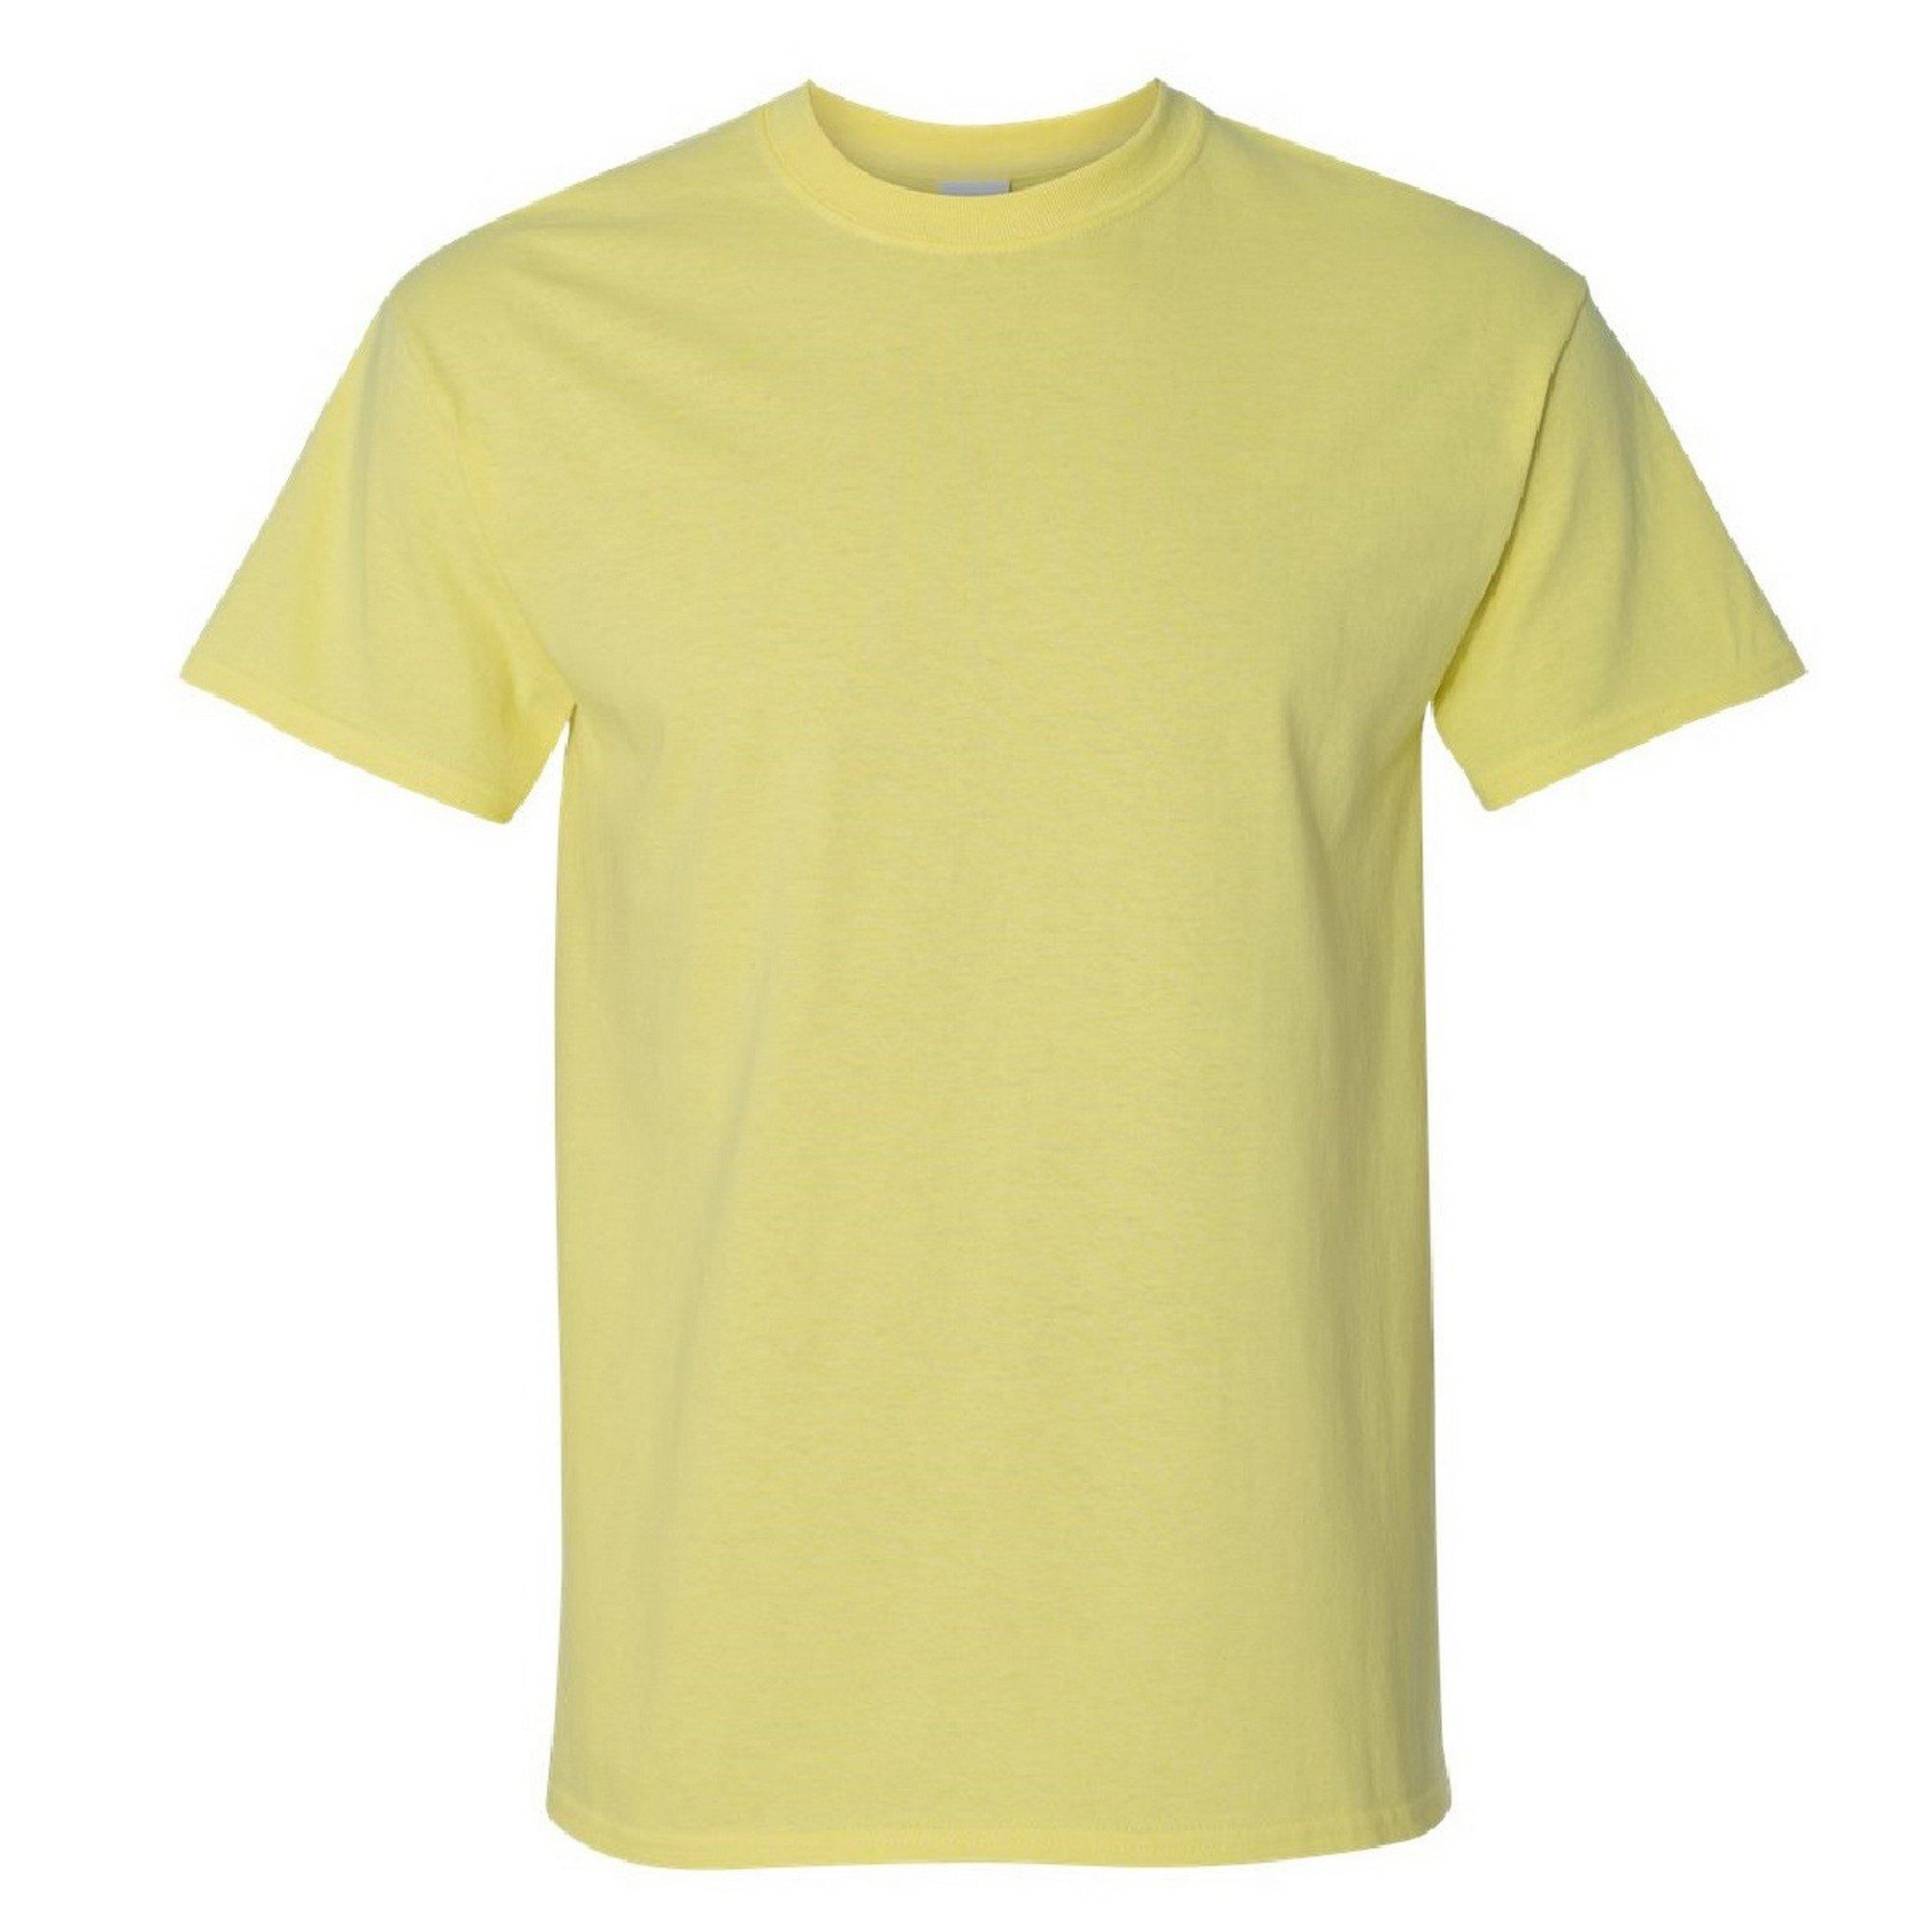 Ultra Tshirt Herren Gelb Bunt XXL von Gildan